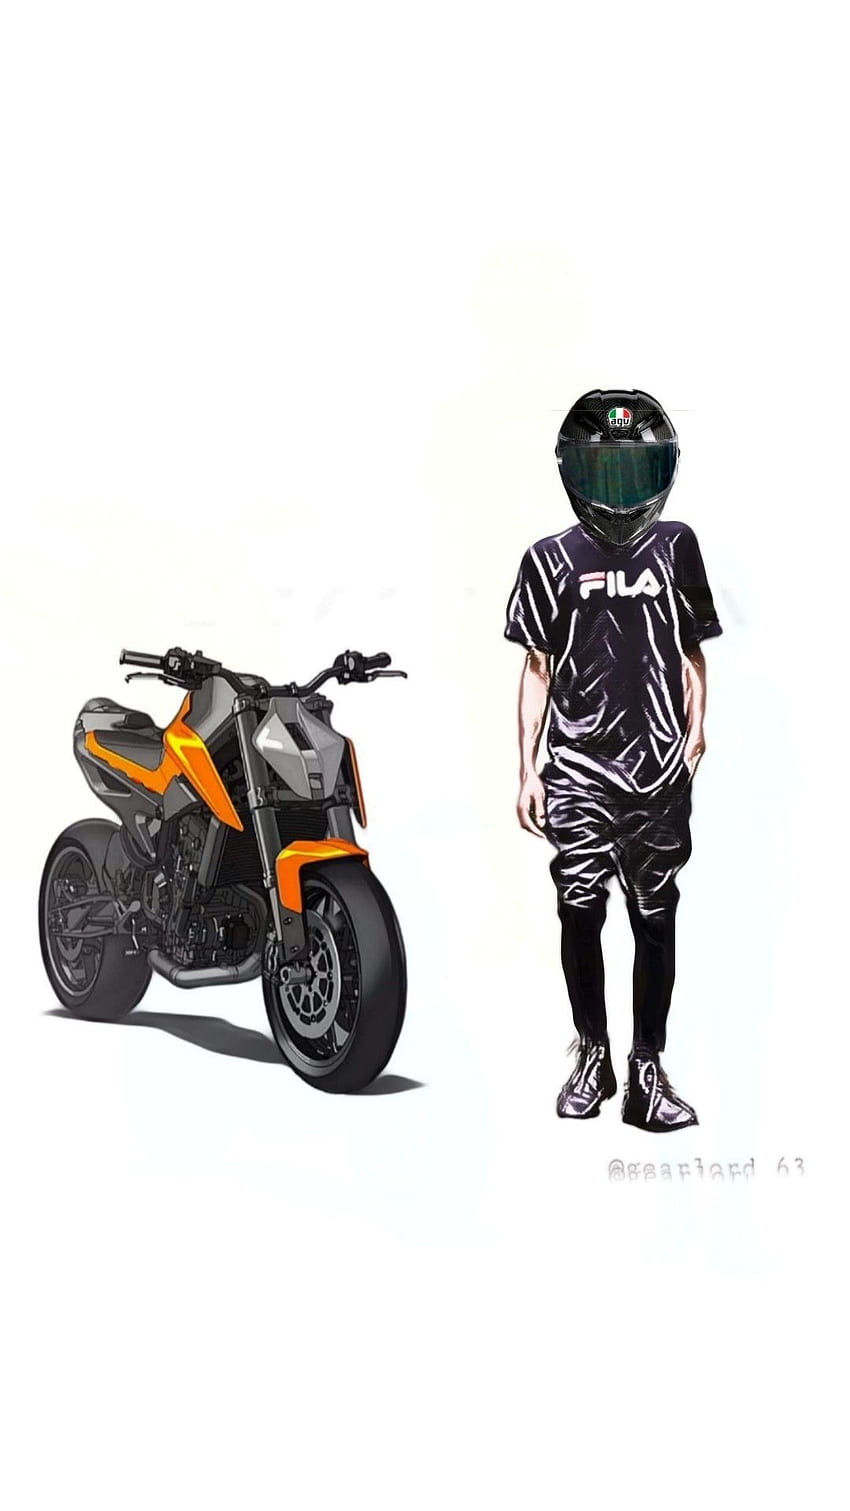 Yamaha MT15 - Bike Sketch Wallpaper Download | MobCup-gemektower.com.vn